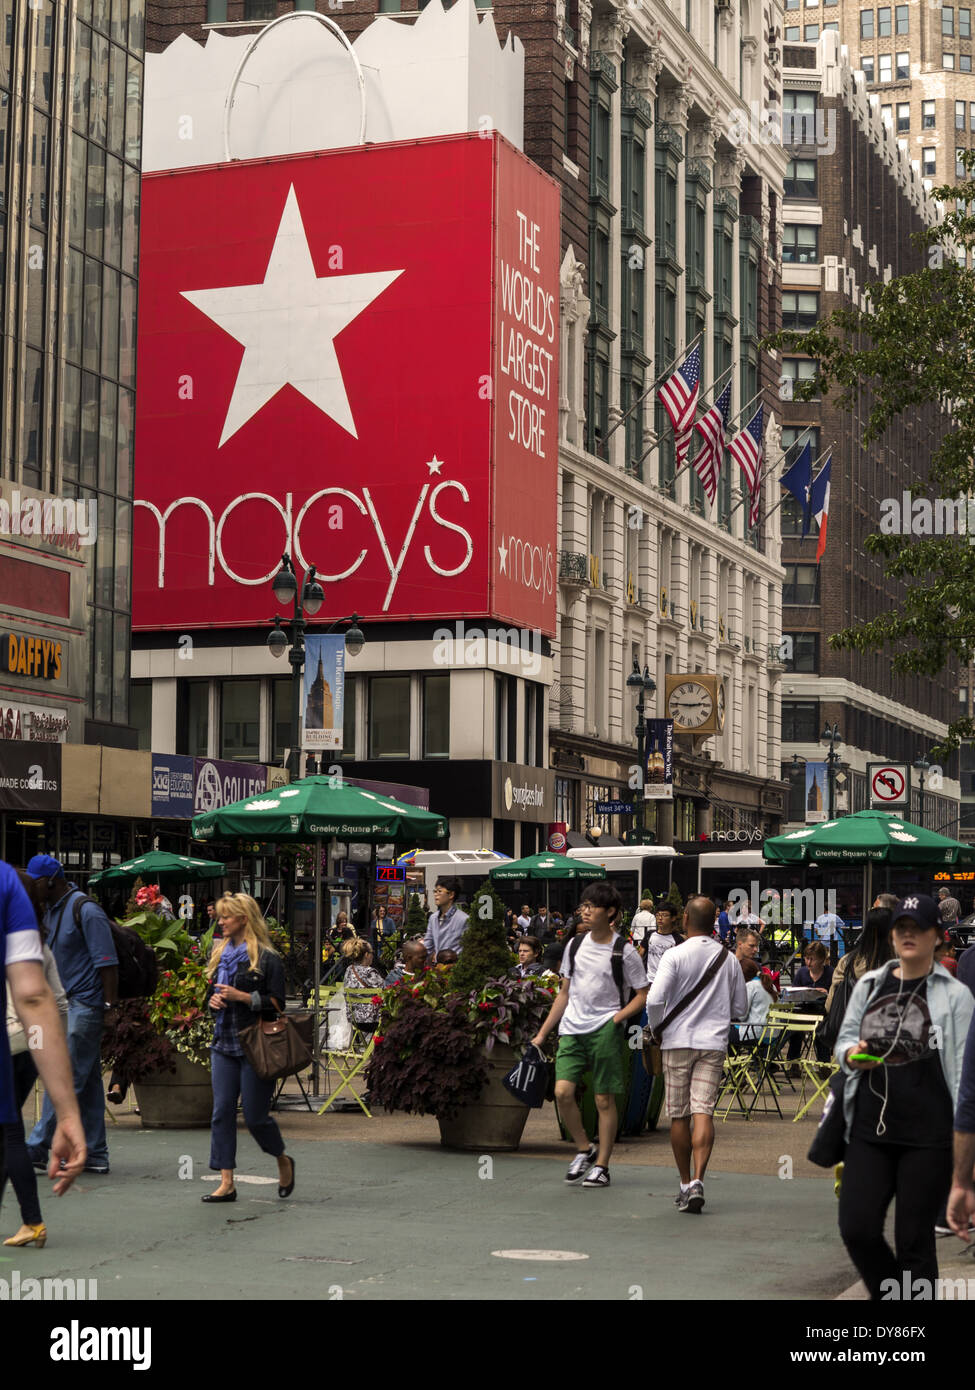 Macys sign on storefront Broadway New York USA Stock Photo